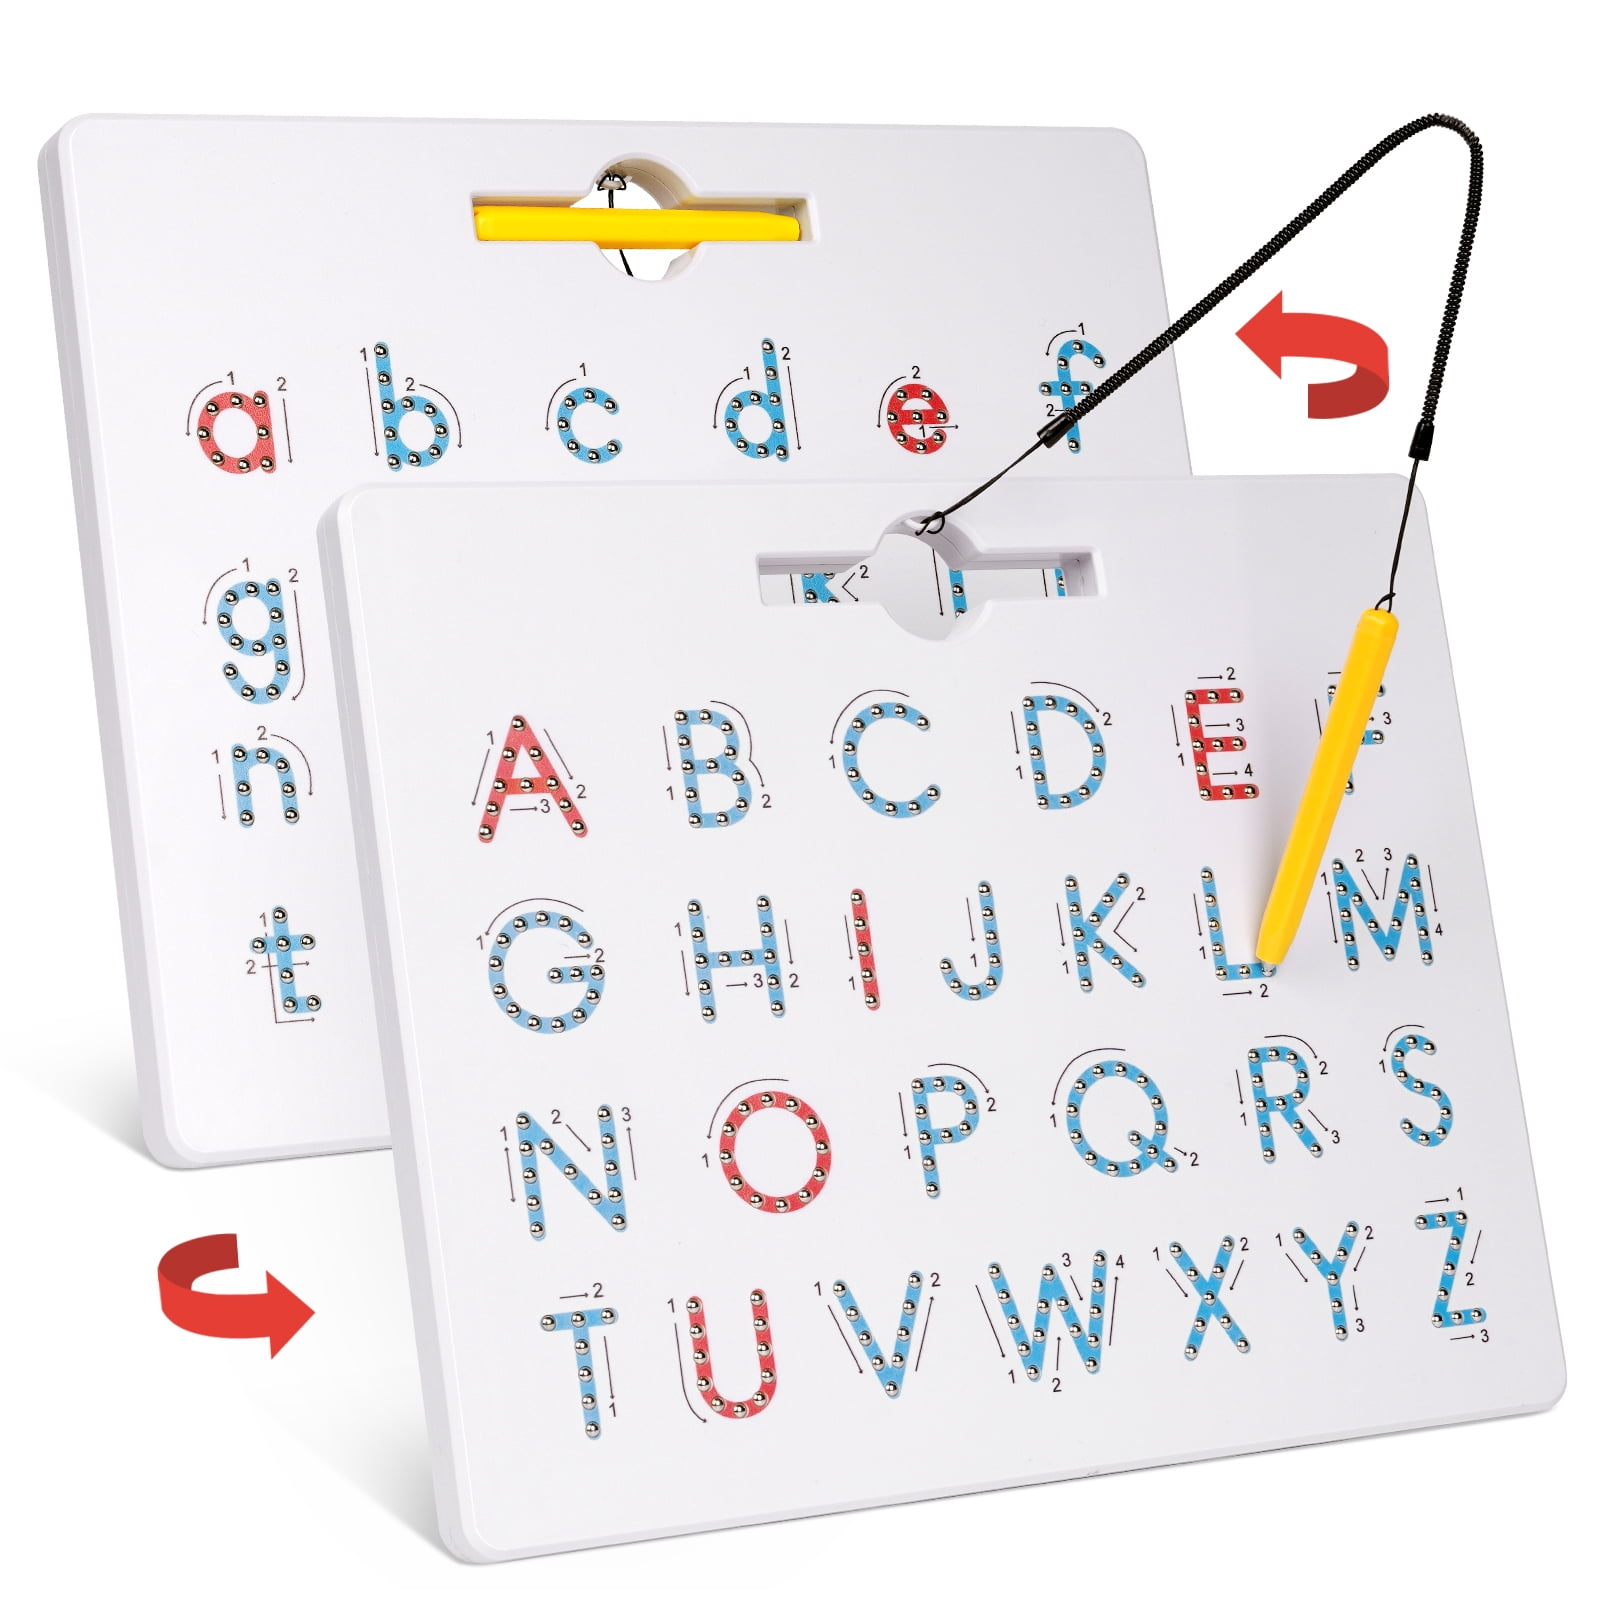 Magnetic Alphabet Board